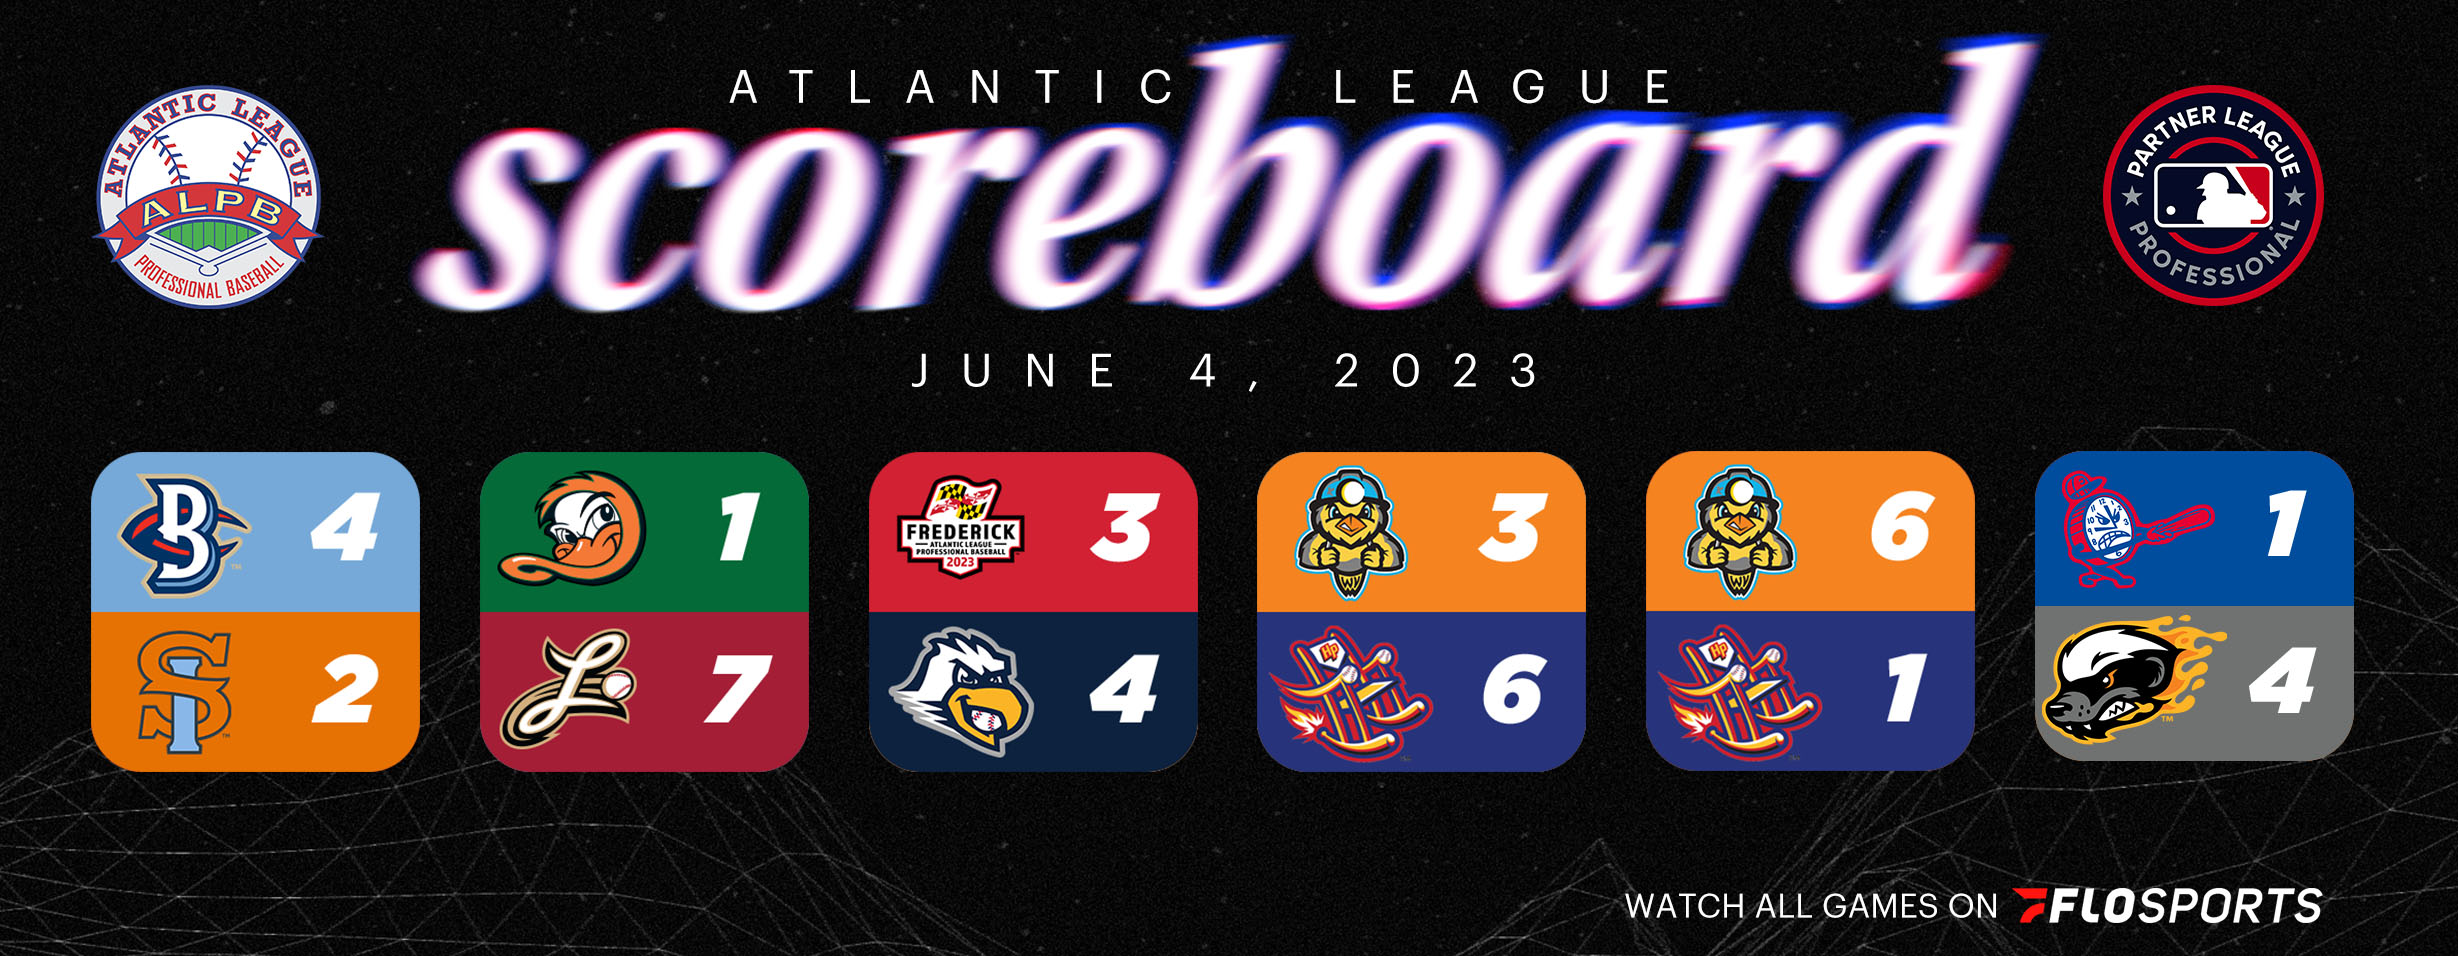 Atlantic League Results, Sunday, June 4, 2023